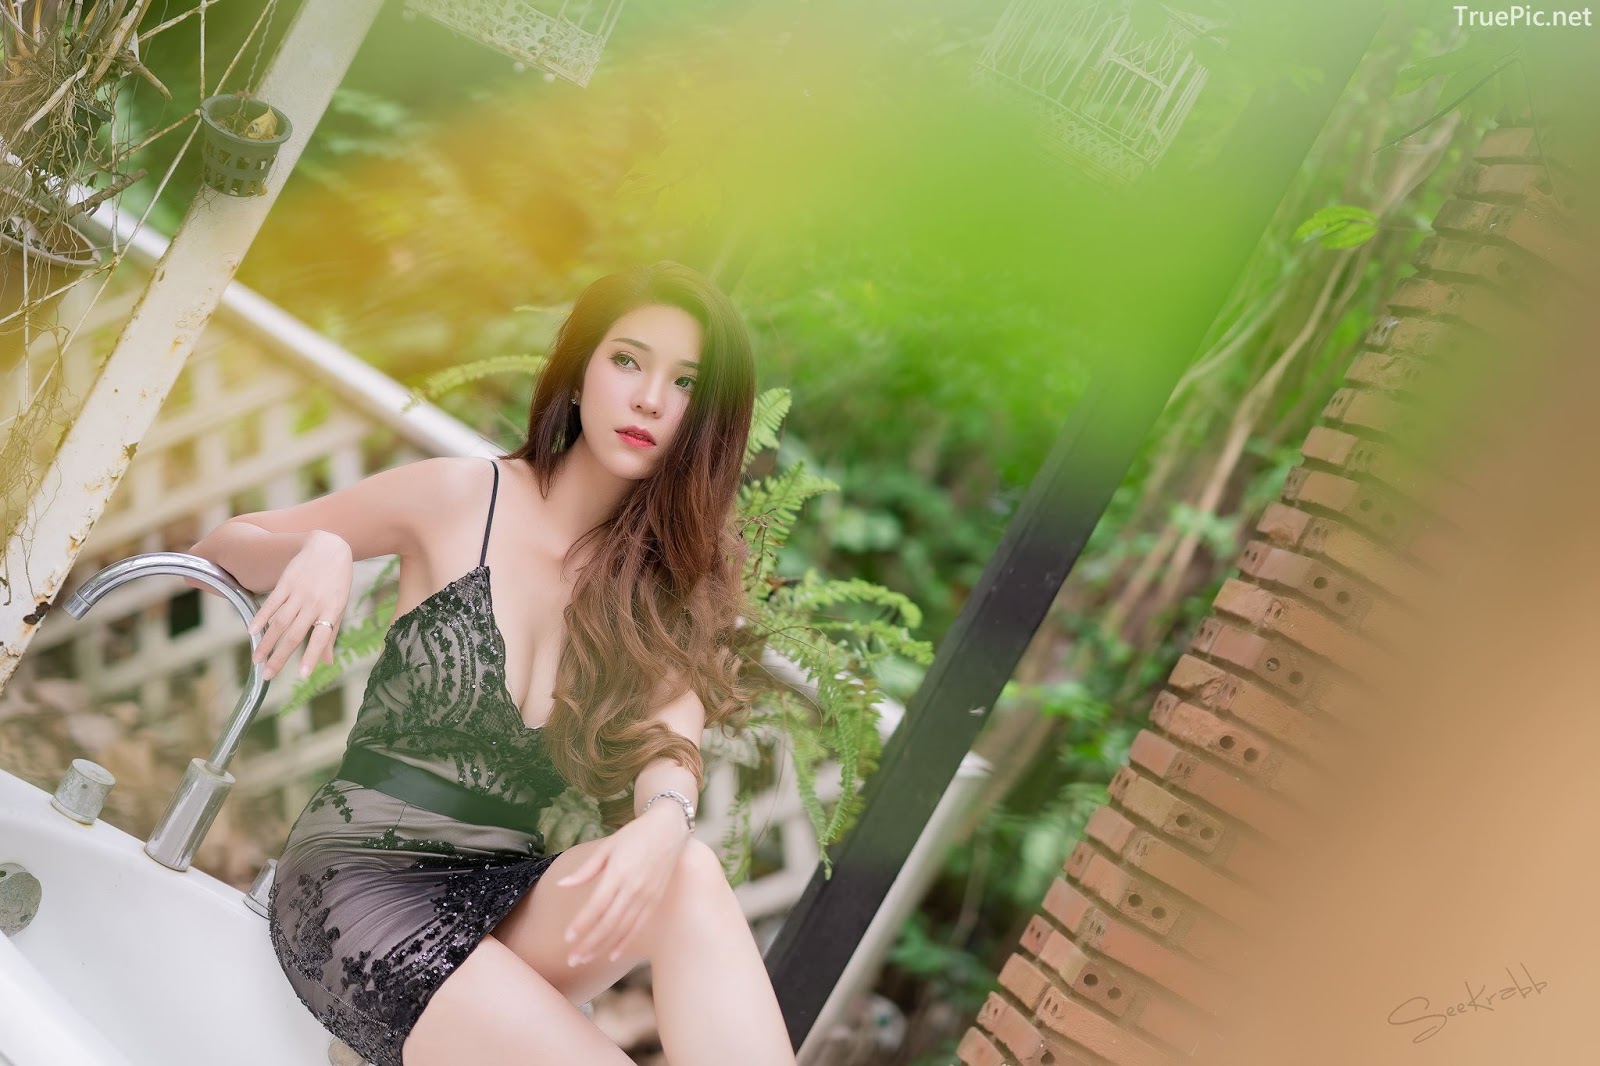 Thailand hot model - Janet Kanokwan Saesim - Black sexy garden - TruePic.net - Picture 11